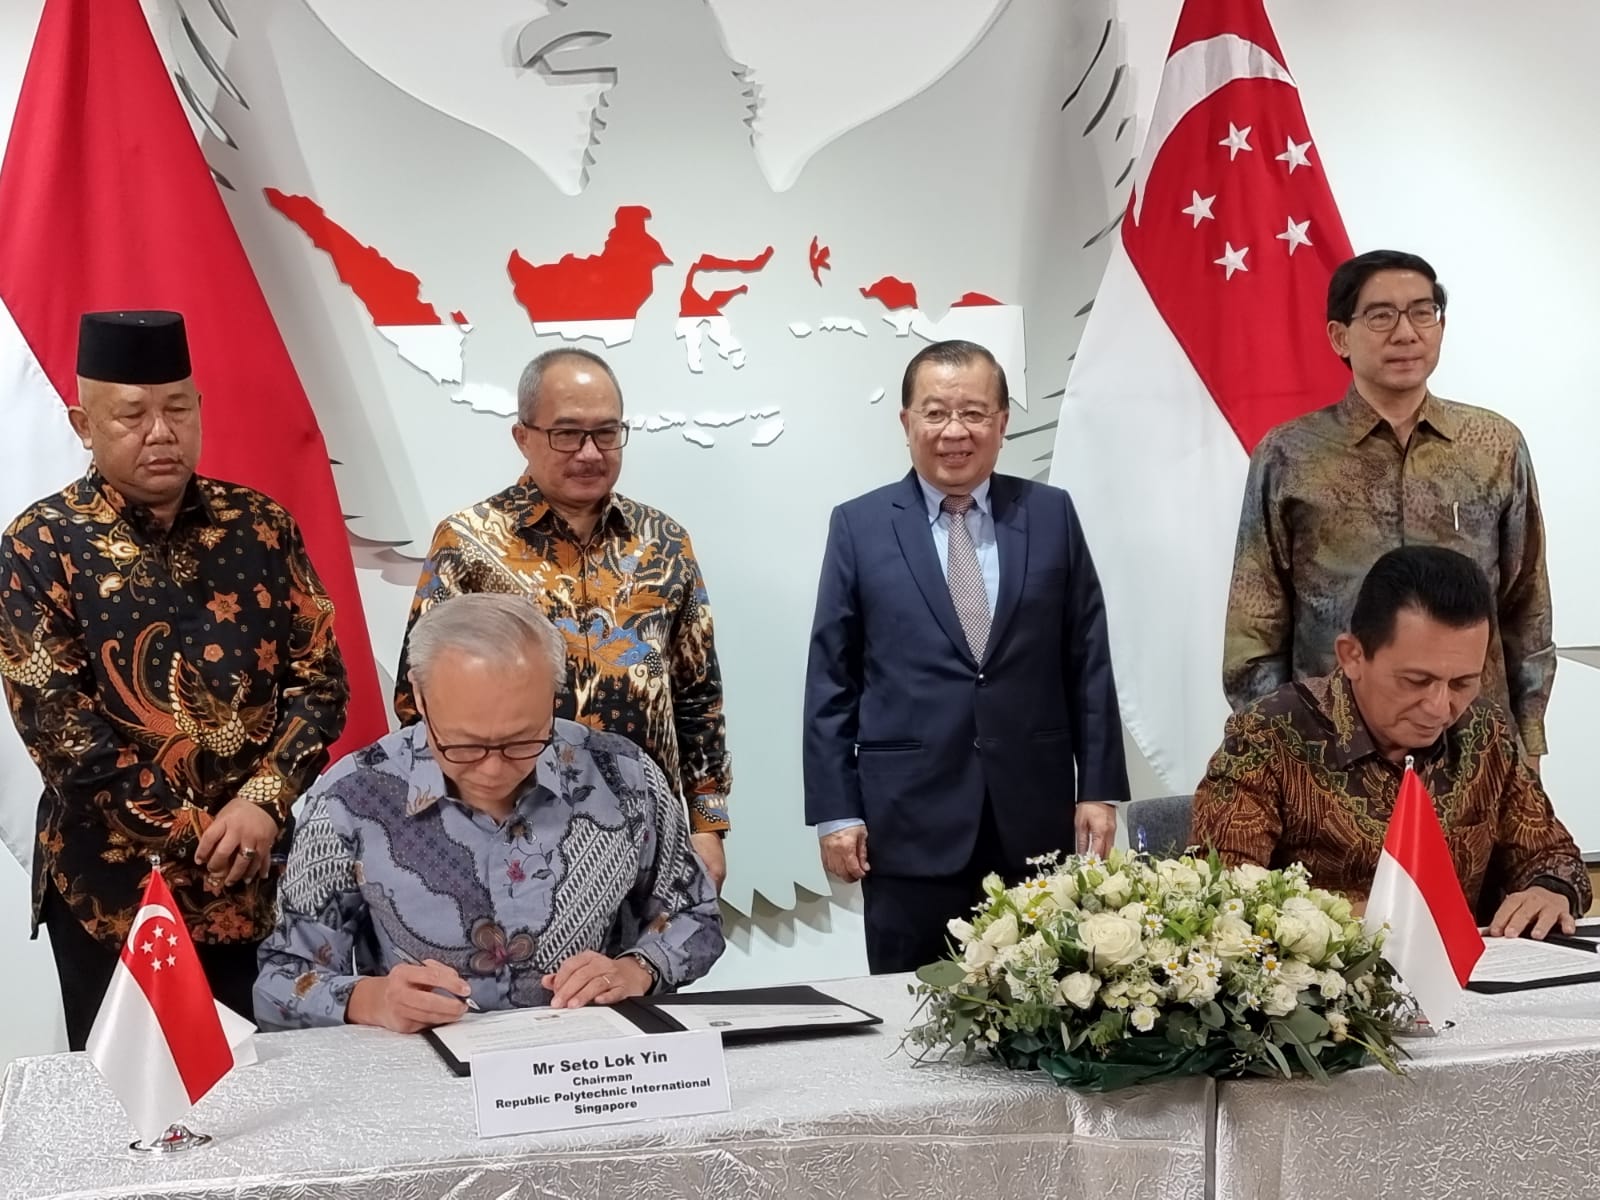 Gubernur Kepri Ansar Ahmad dan Republic Polytechnic (RP) Singapura telah menandatangani kesepakatan kerja sama (MoI/Memorandum of Intent) bidang teknologi pertanian dan aquaculture, Selasa, (19/4/ 2022) bertempat di KBRI Singapura.